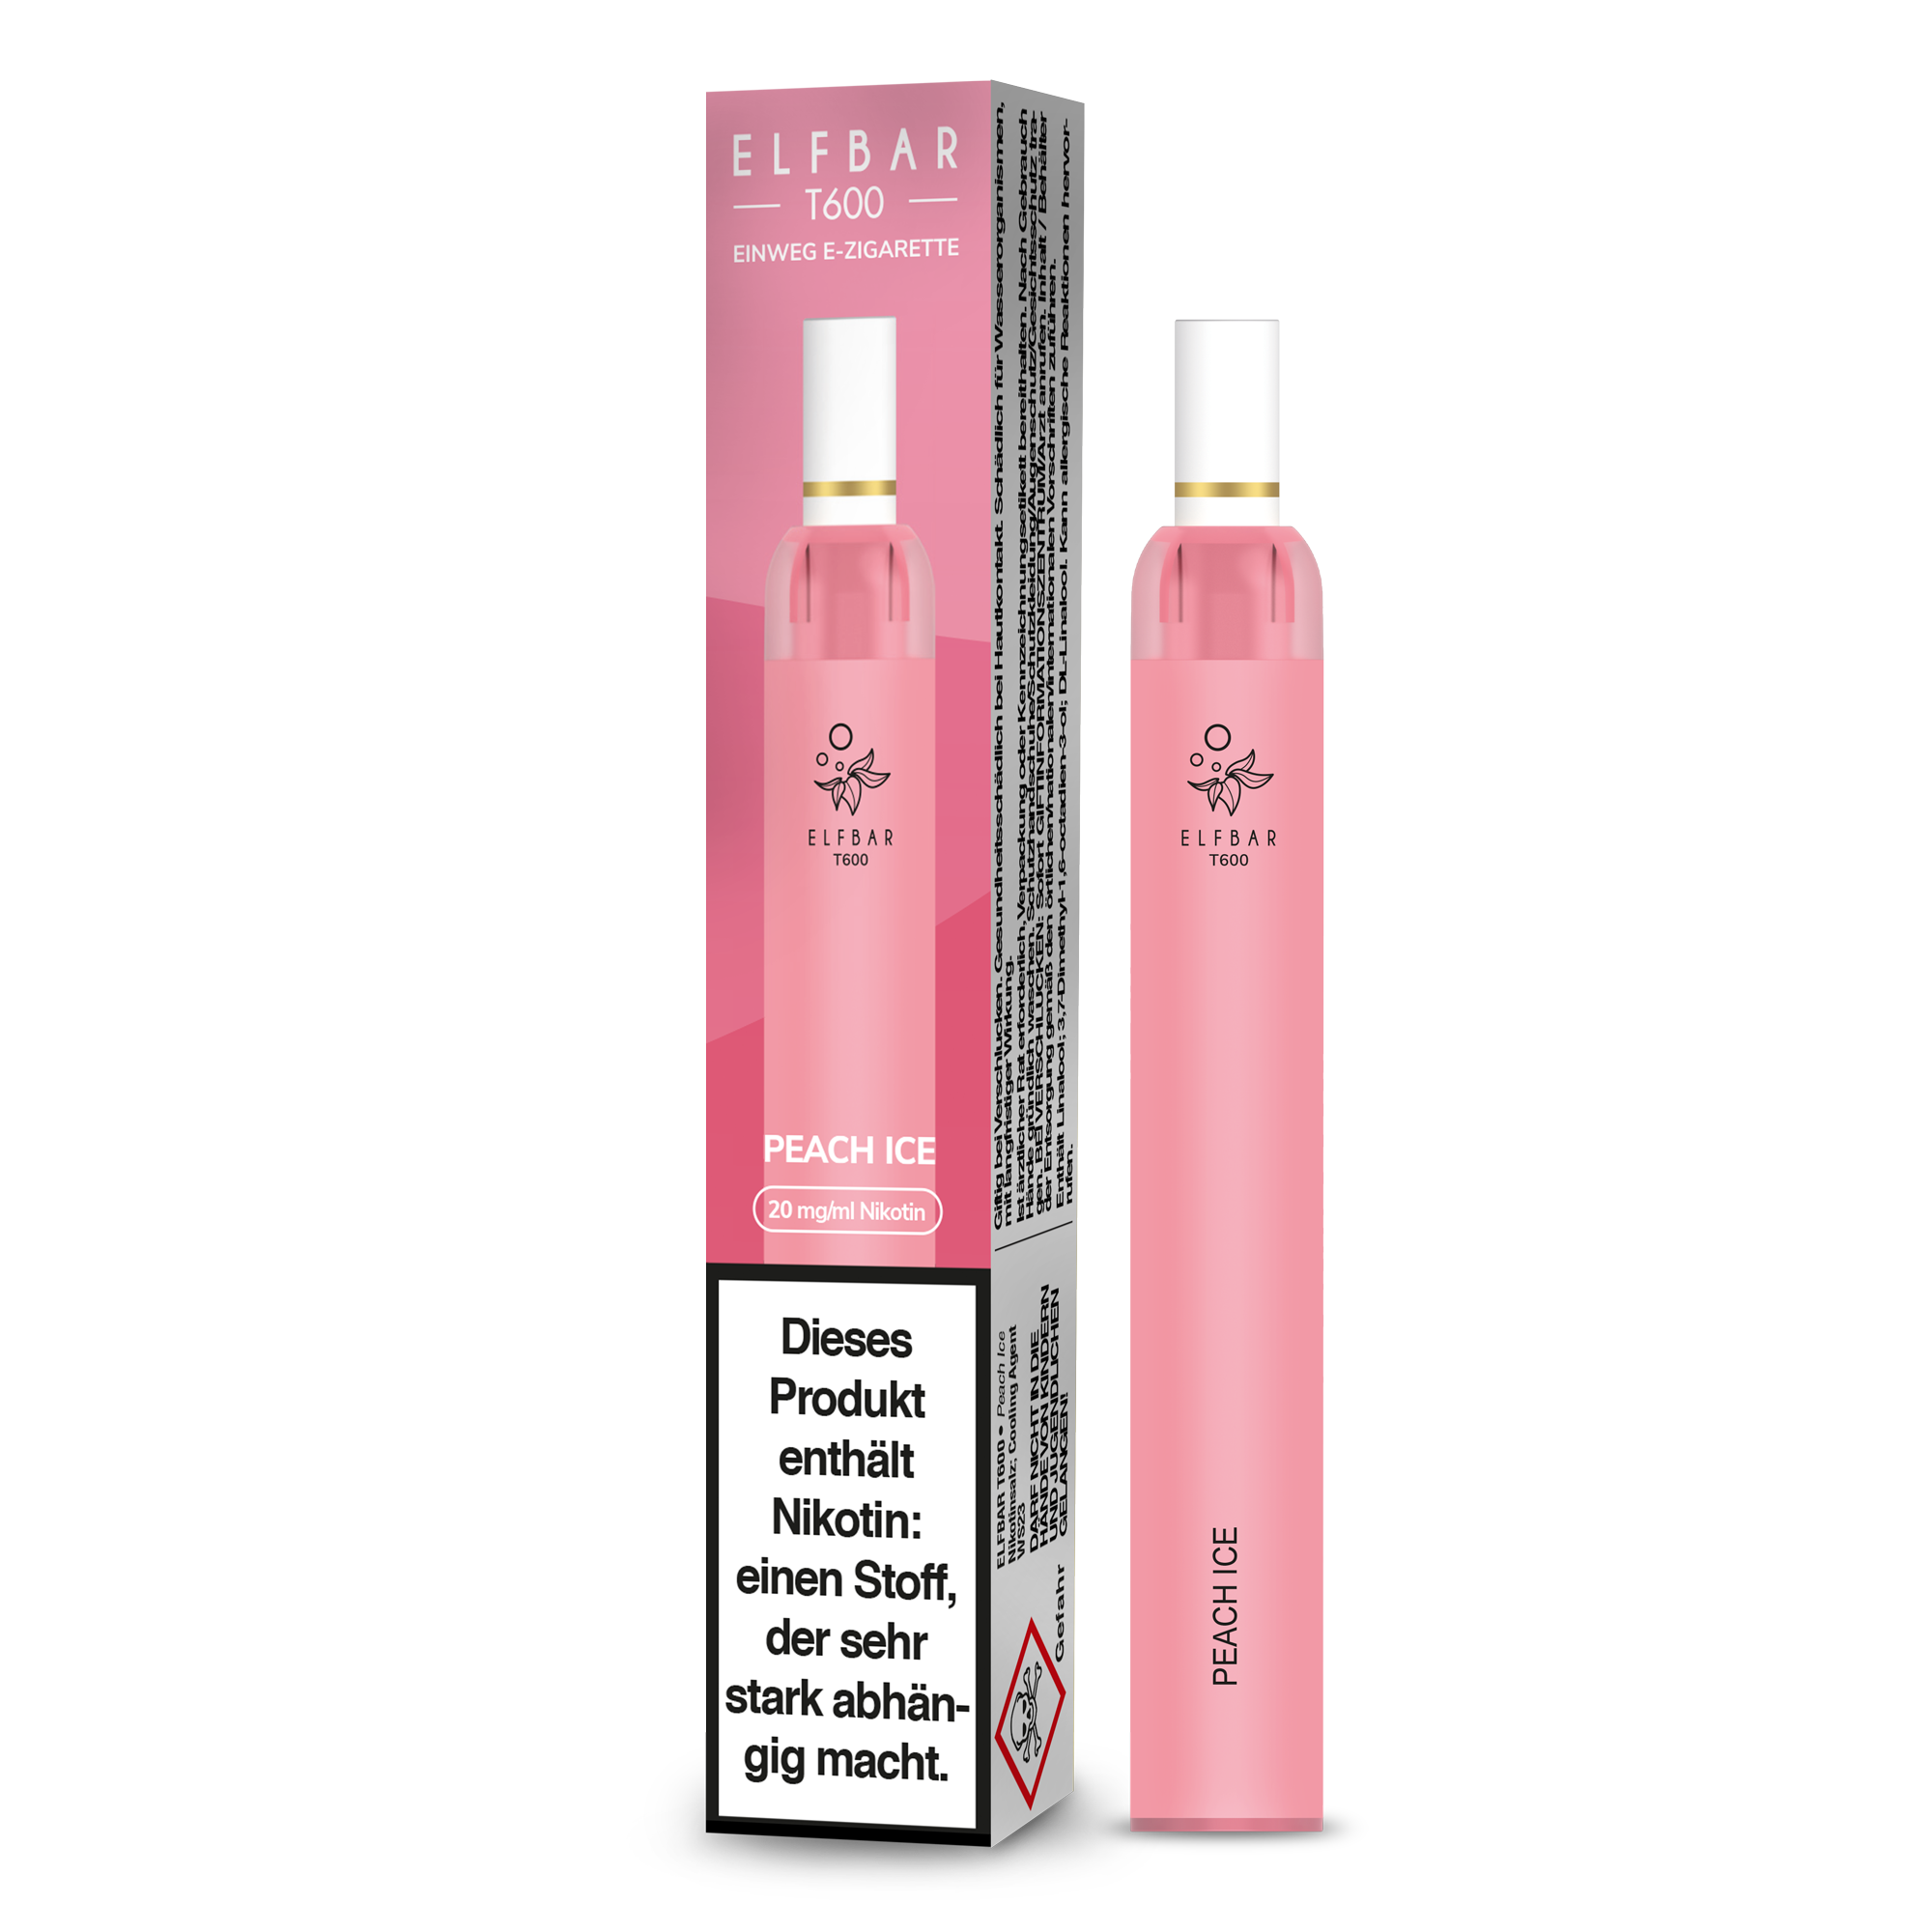 Elf Bar T600 Einweg E-Zigarette - Juicy Peach/Peach Ice 20 mg/ml